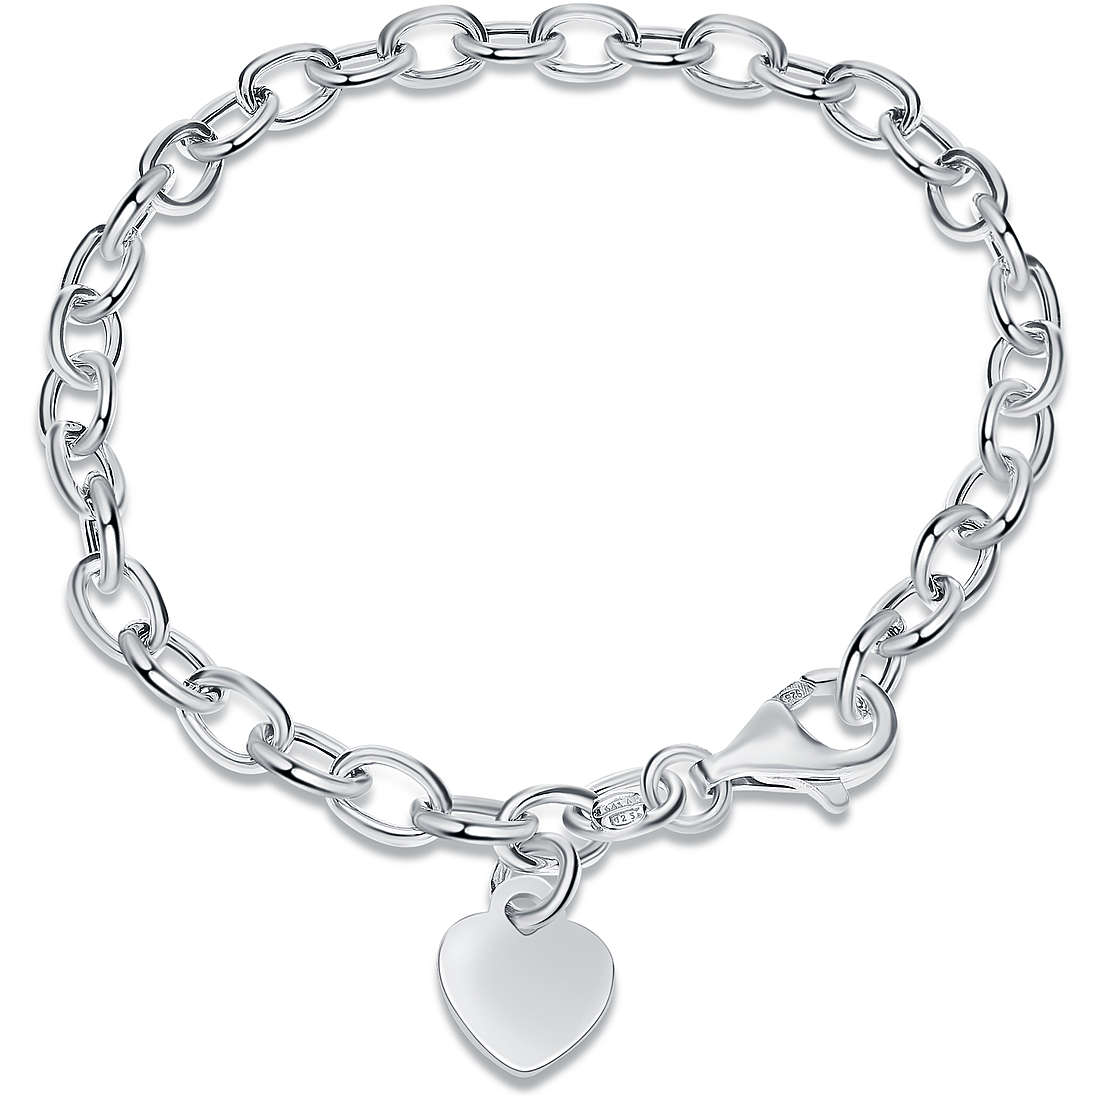 bracelet woman Chain 925 Silver jewel GioiaPura WBM01307LL